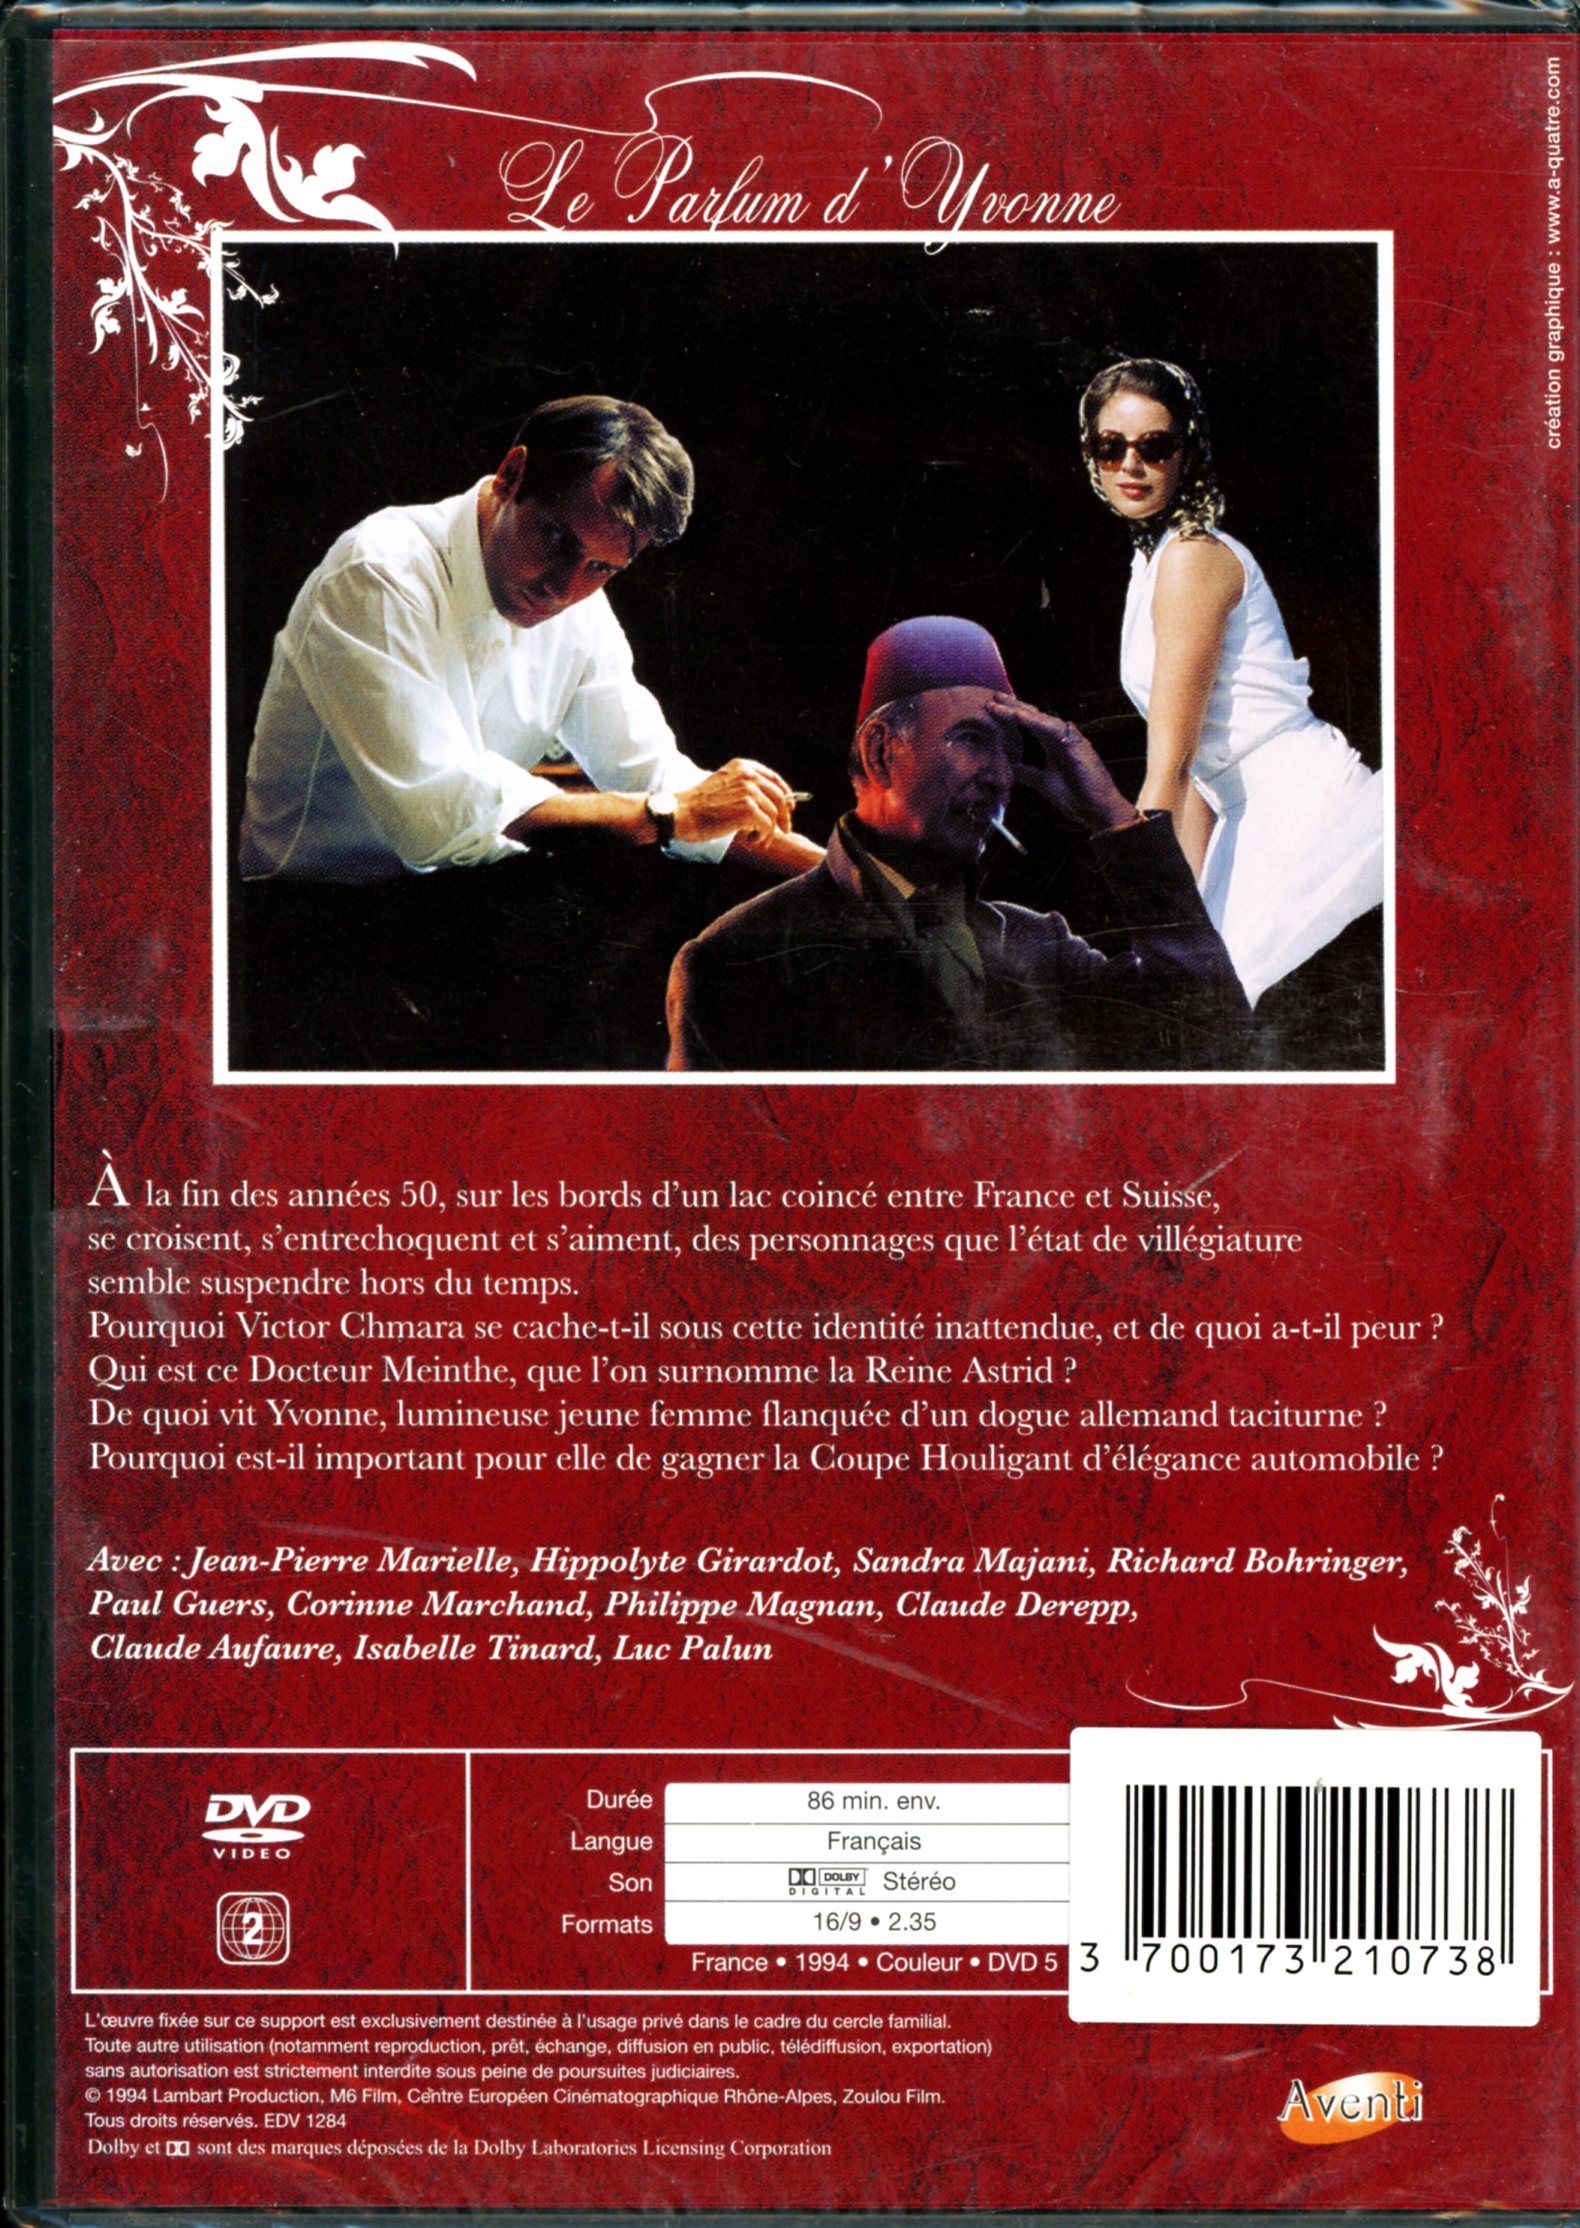 DVD-PARFUM-YONNE-3700173210738-LEMASTERBROCKERS